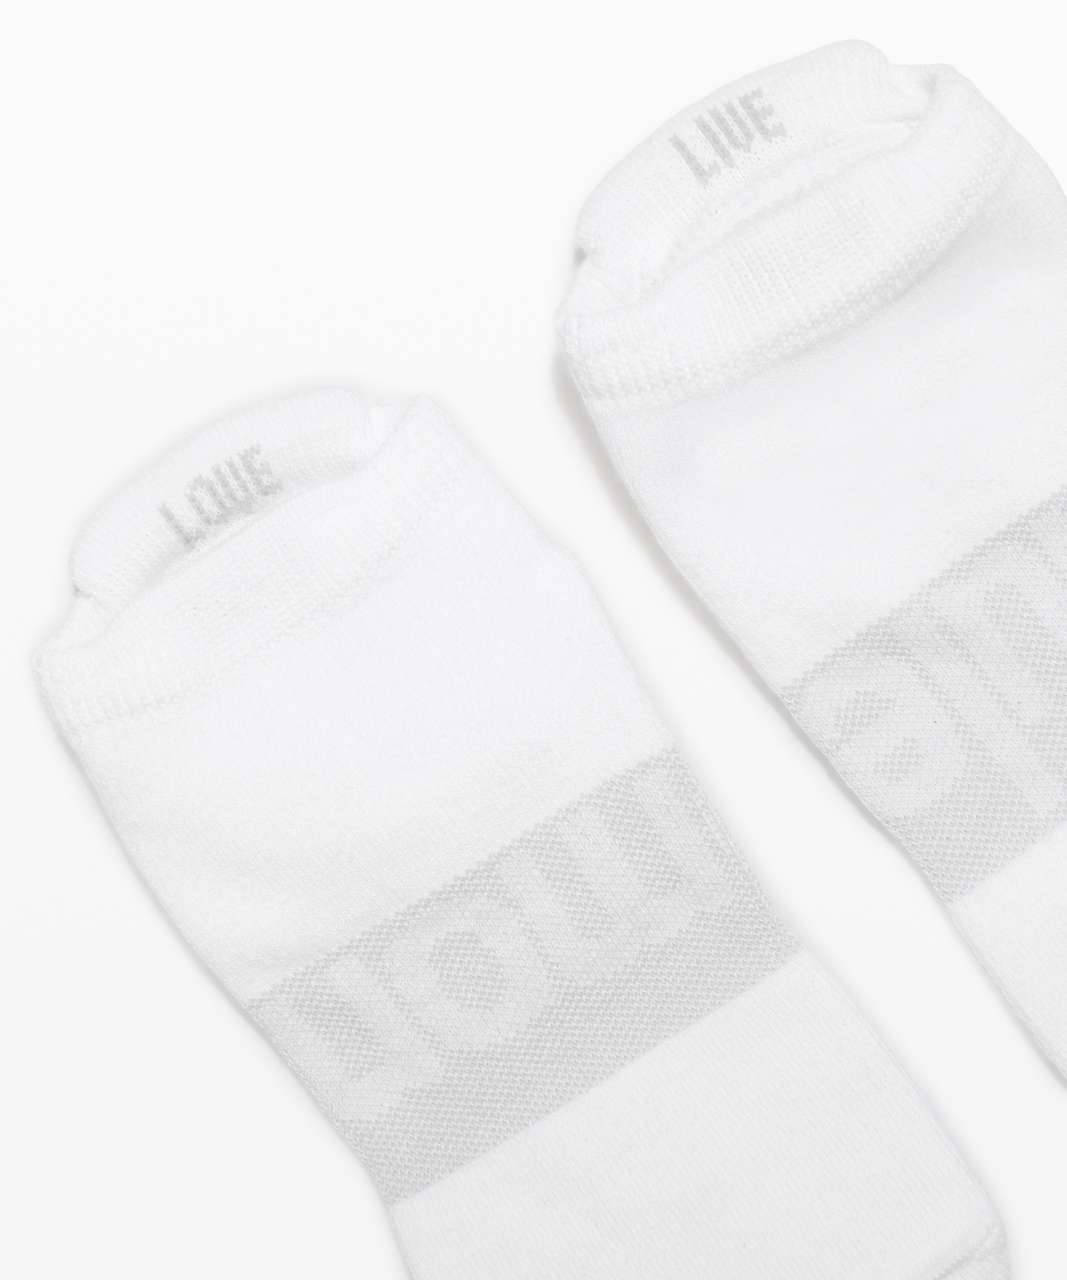 Lululemon Daily Stride Crew Socks Size XL Men's 12.5-14 LM9AJTS White